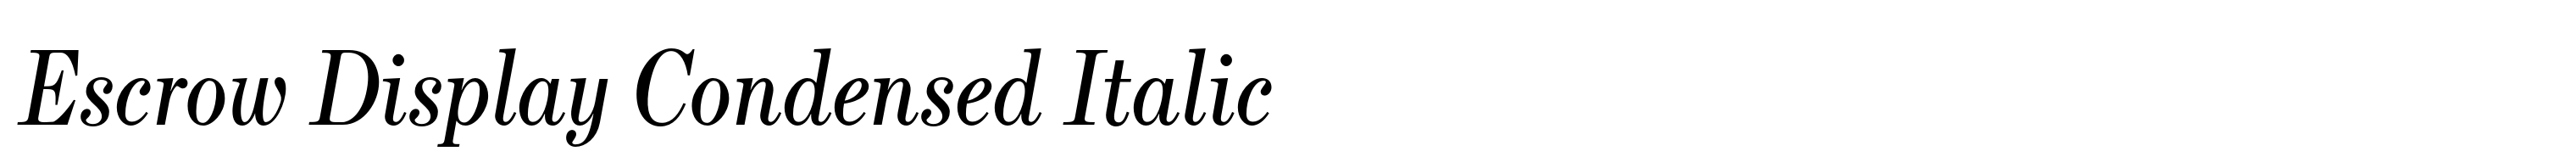 Escrow Display Condensed Italic